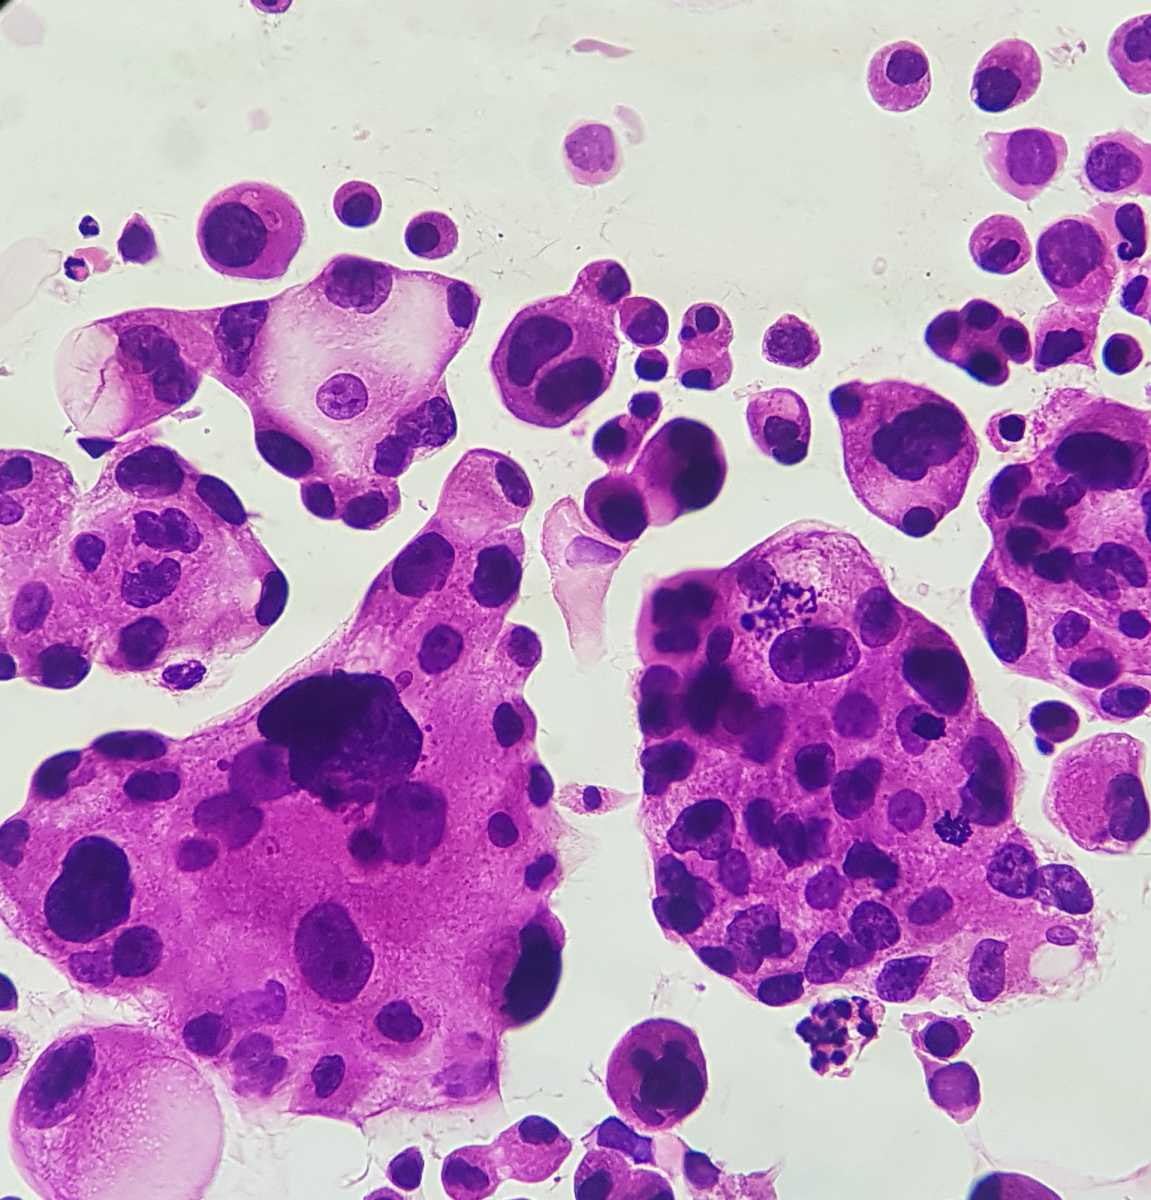 Rosszindulatú daganatos sejtek egy citológiai kenetben.